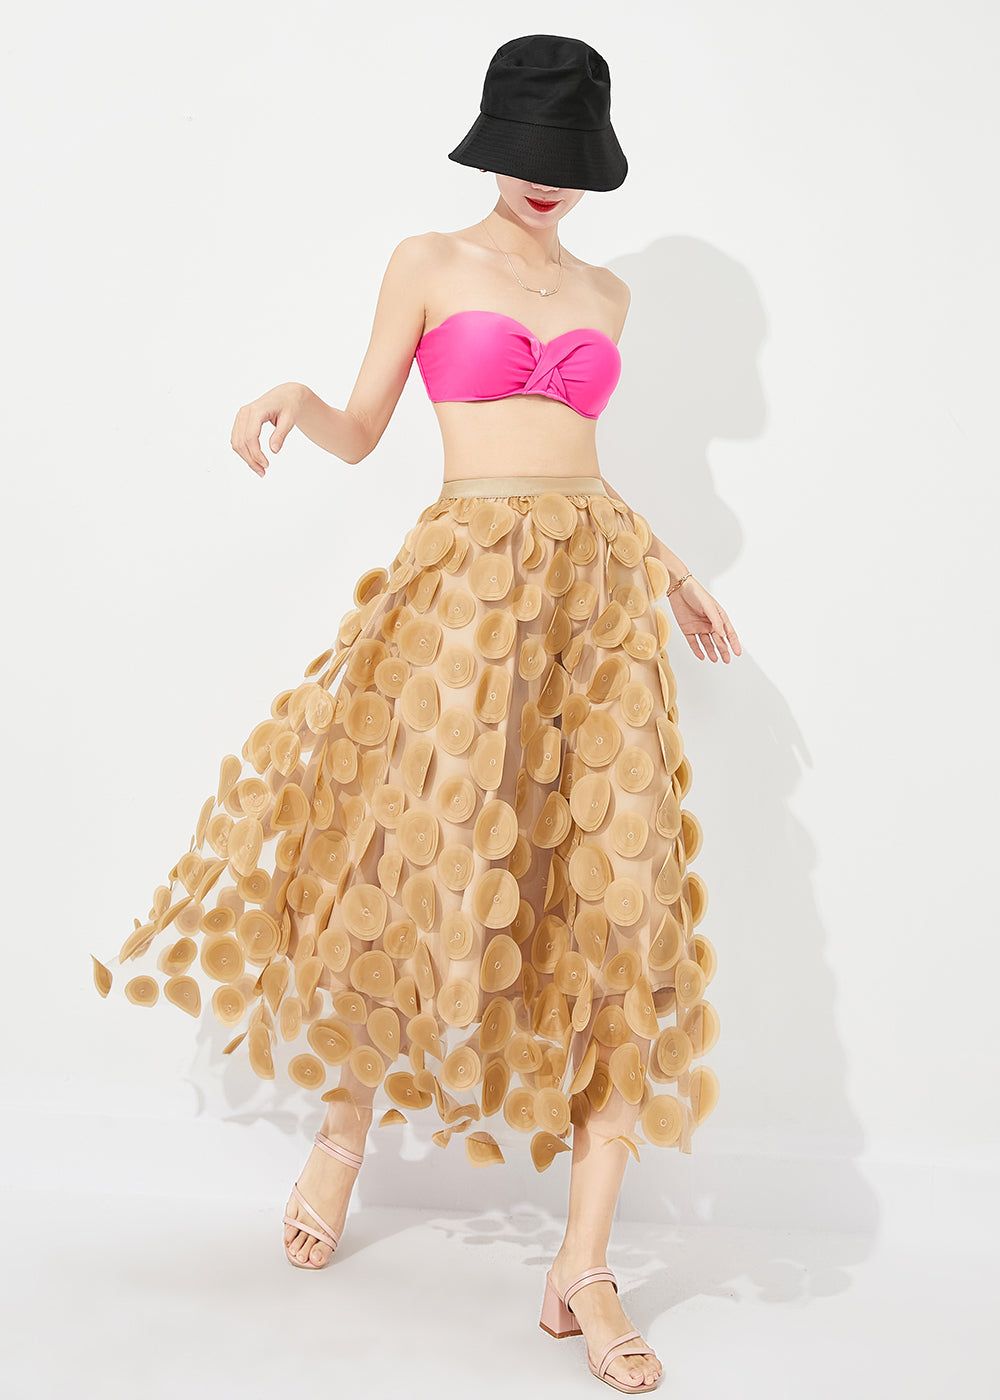 Style Yellow High Waist Exra Large Hem Tulle Skirt Summer